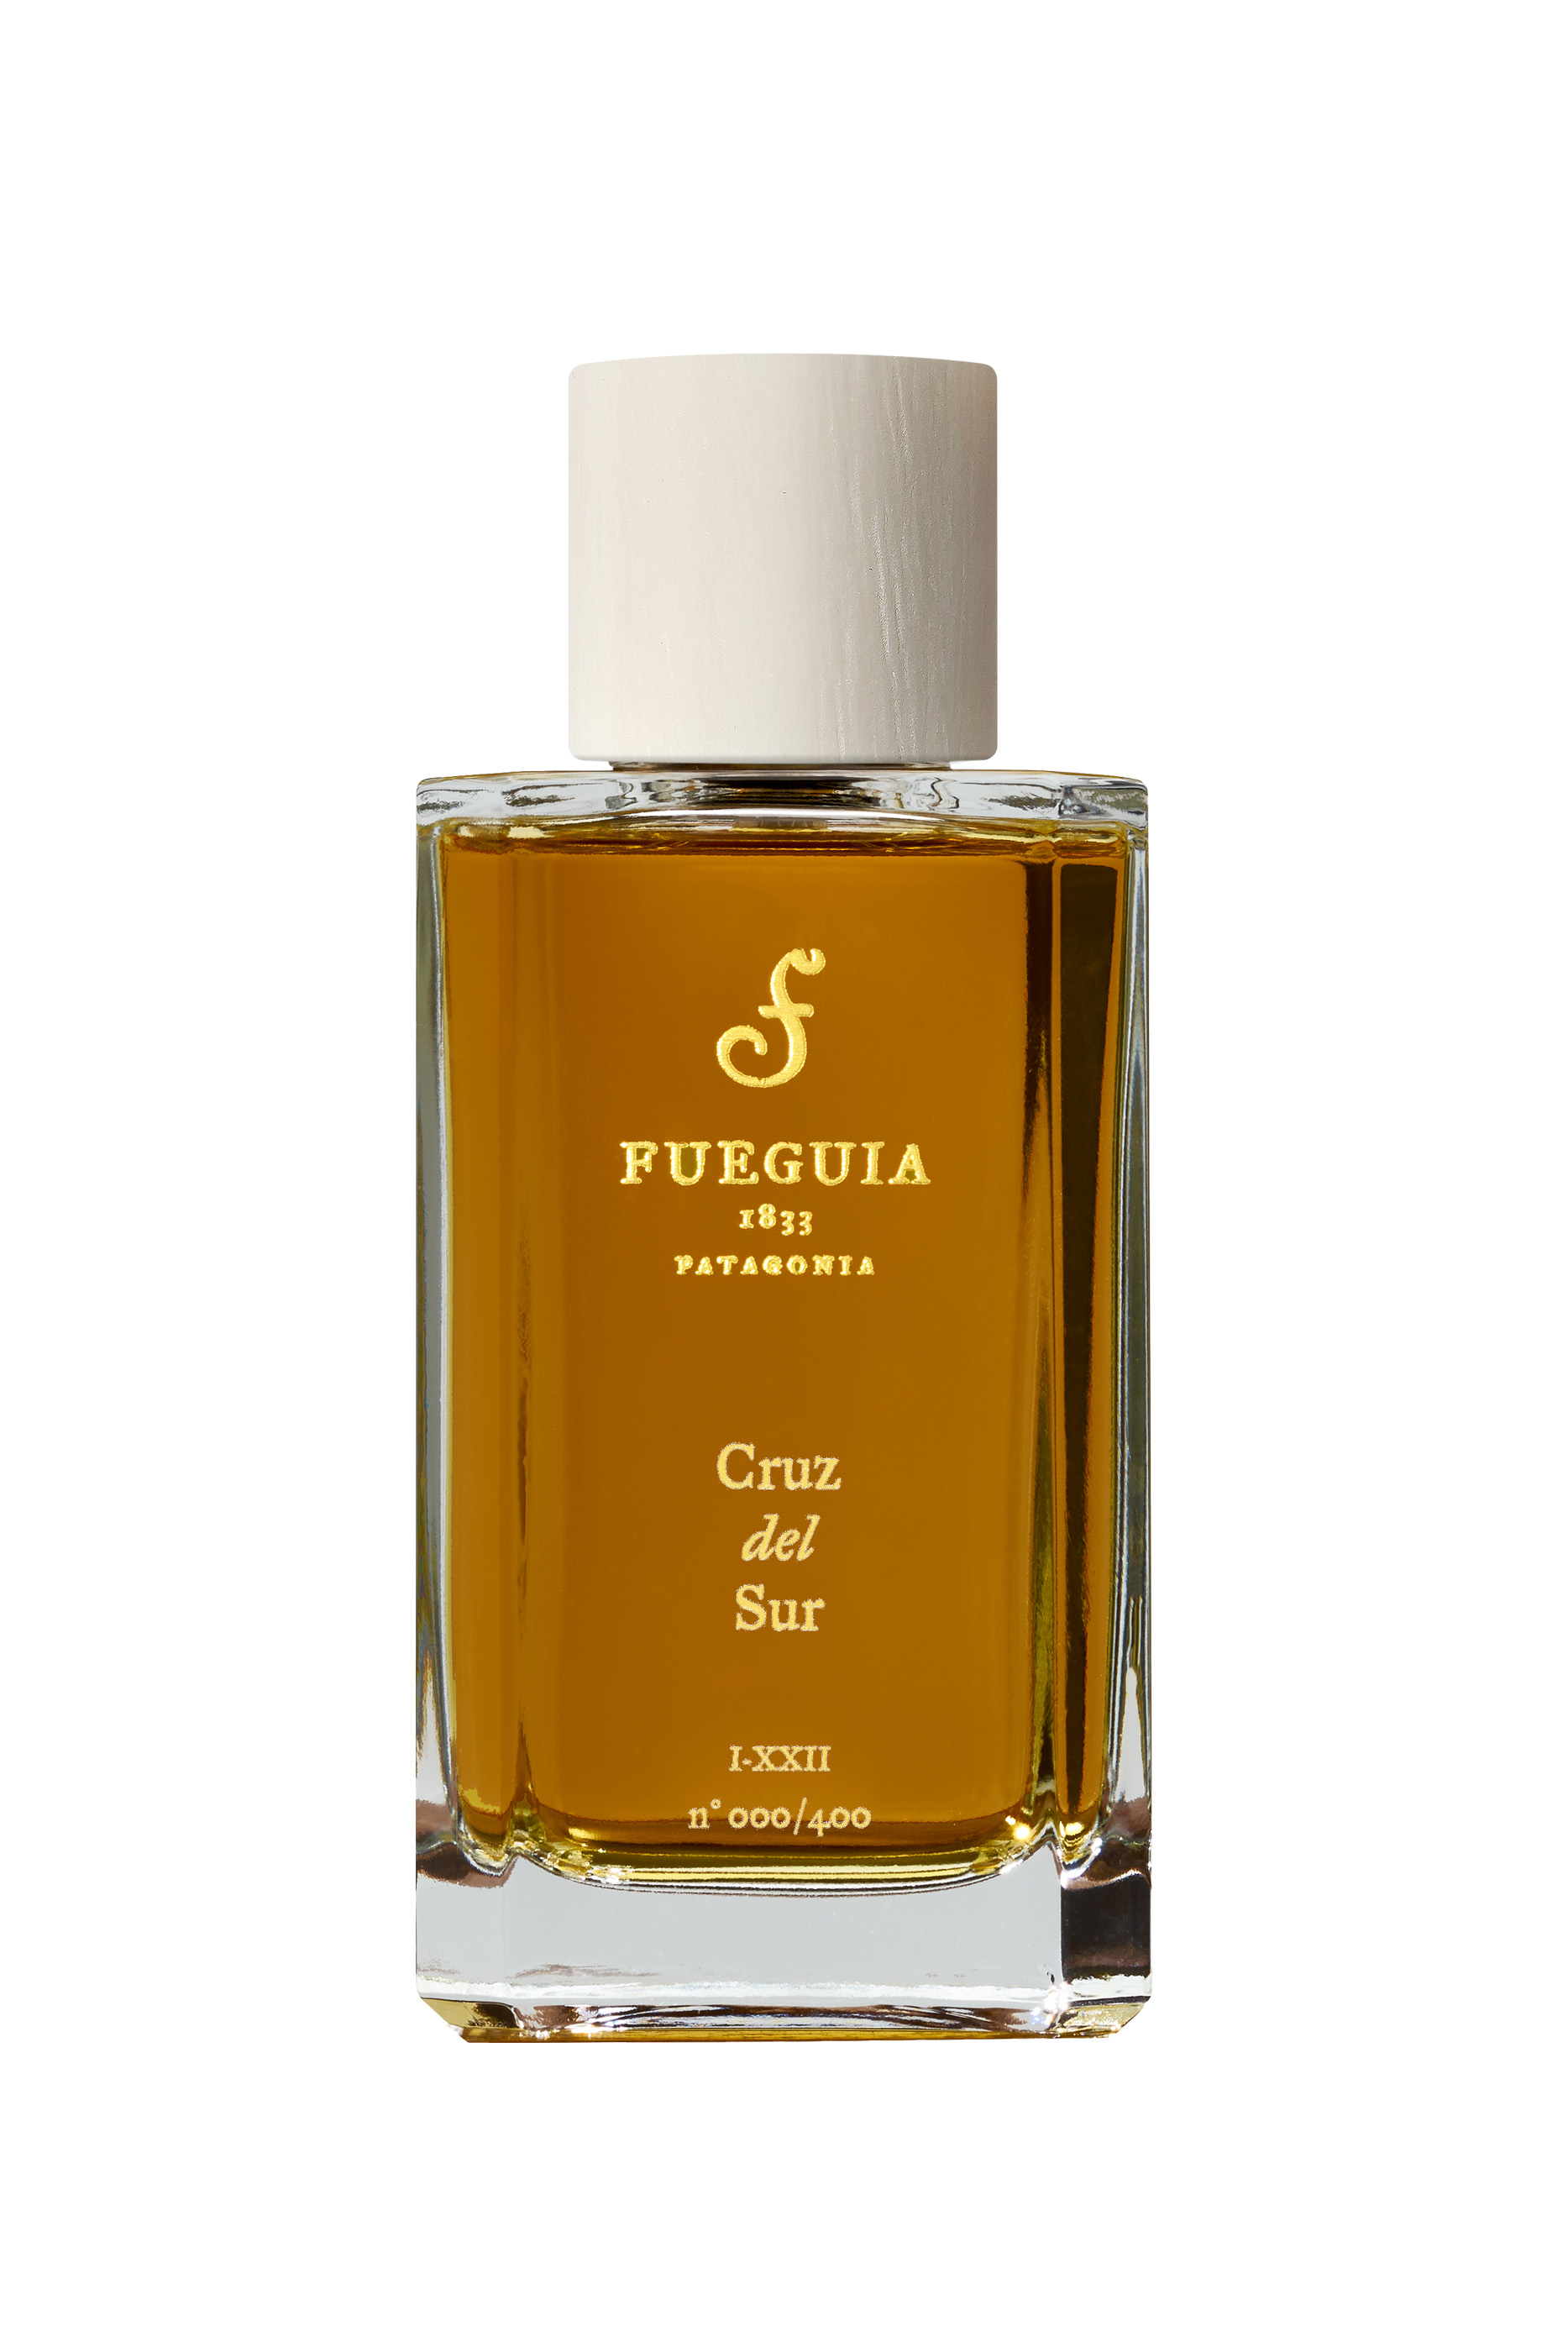 Buy Fueguia 1833 Cruz del Sur Perfume for | Bloomingdale's Kuwait